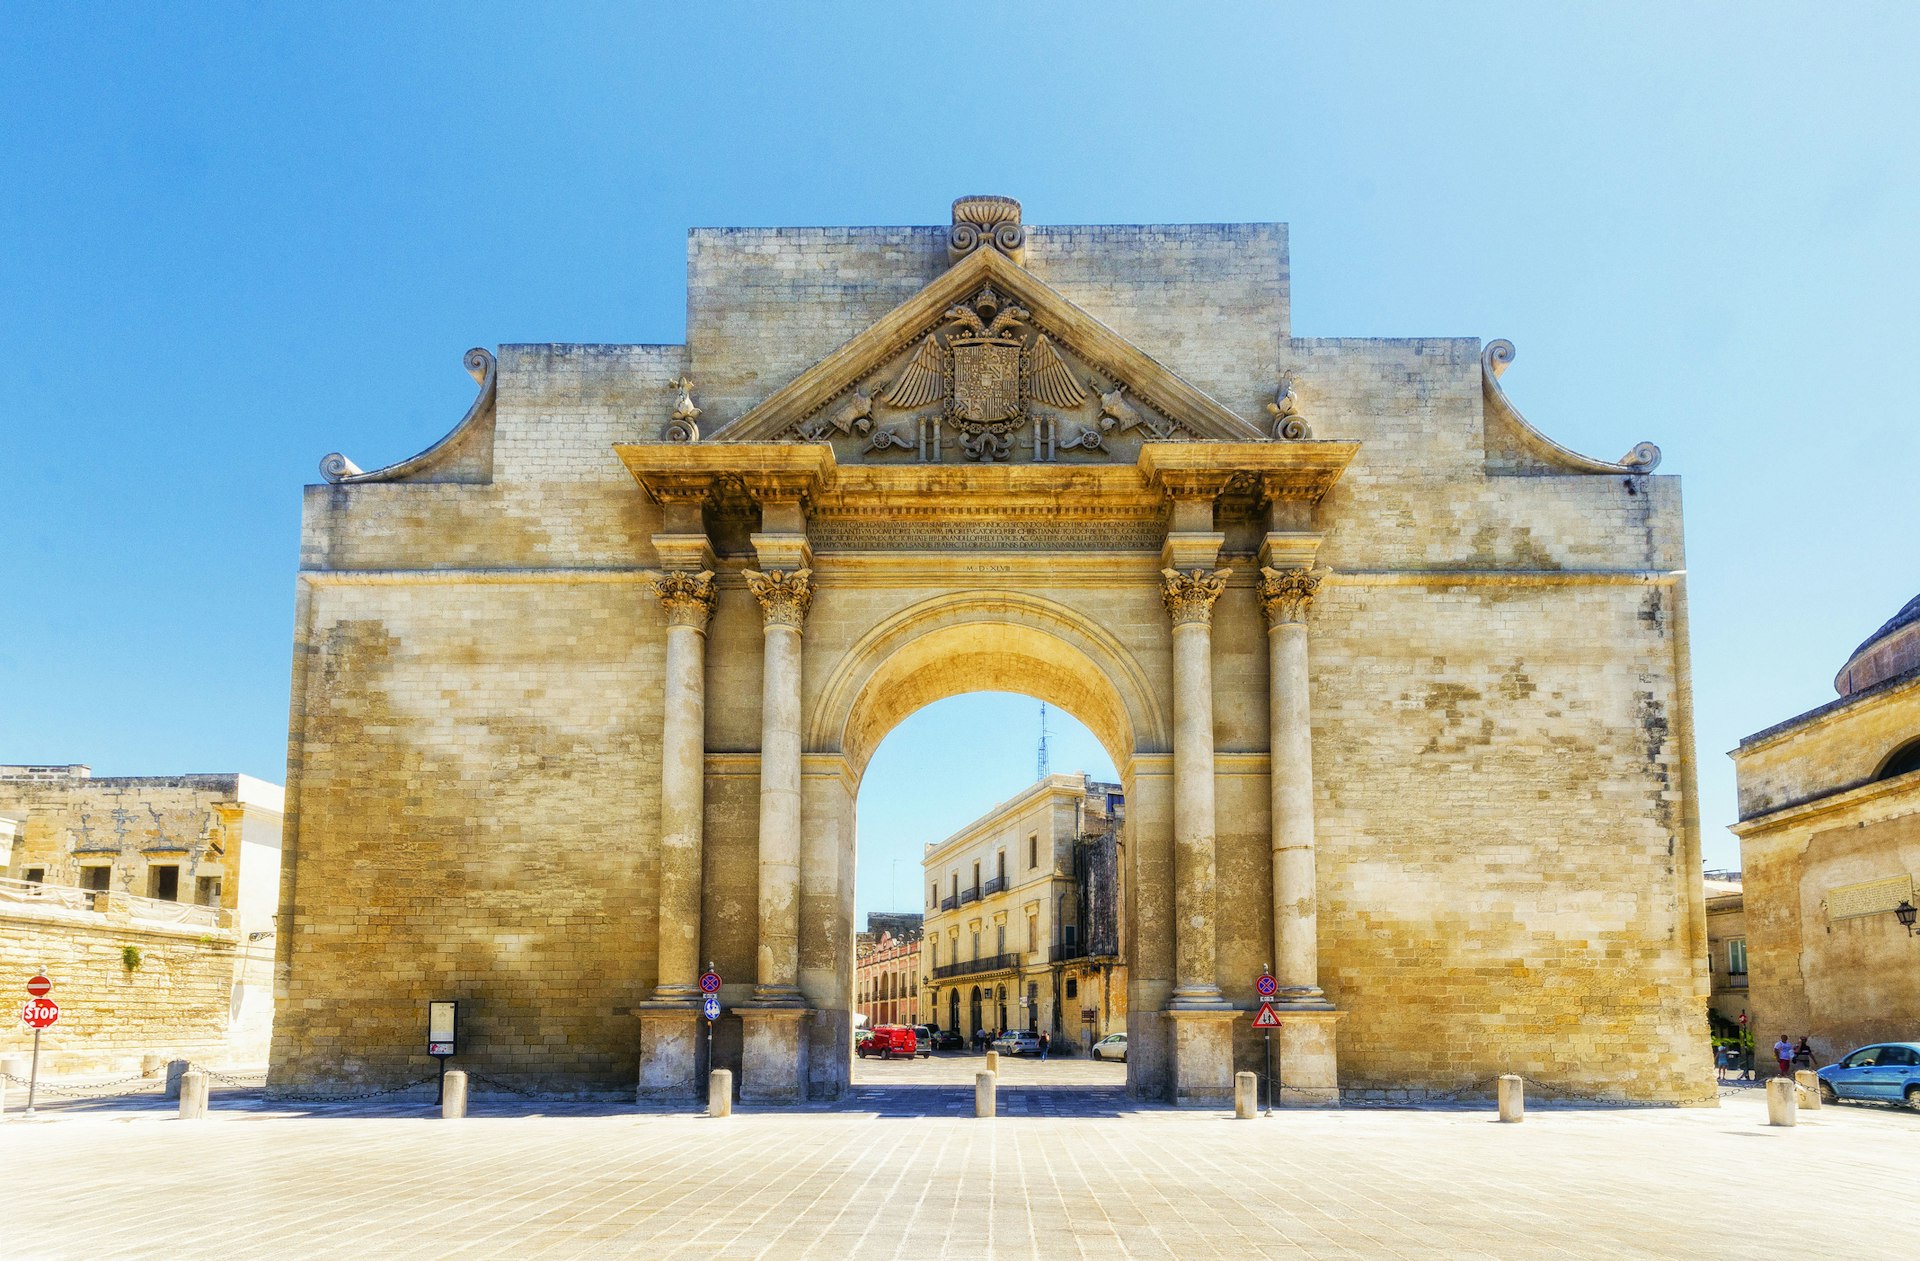 A vast ornate town gate in a city square